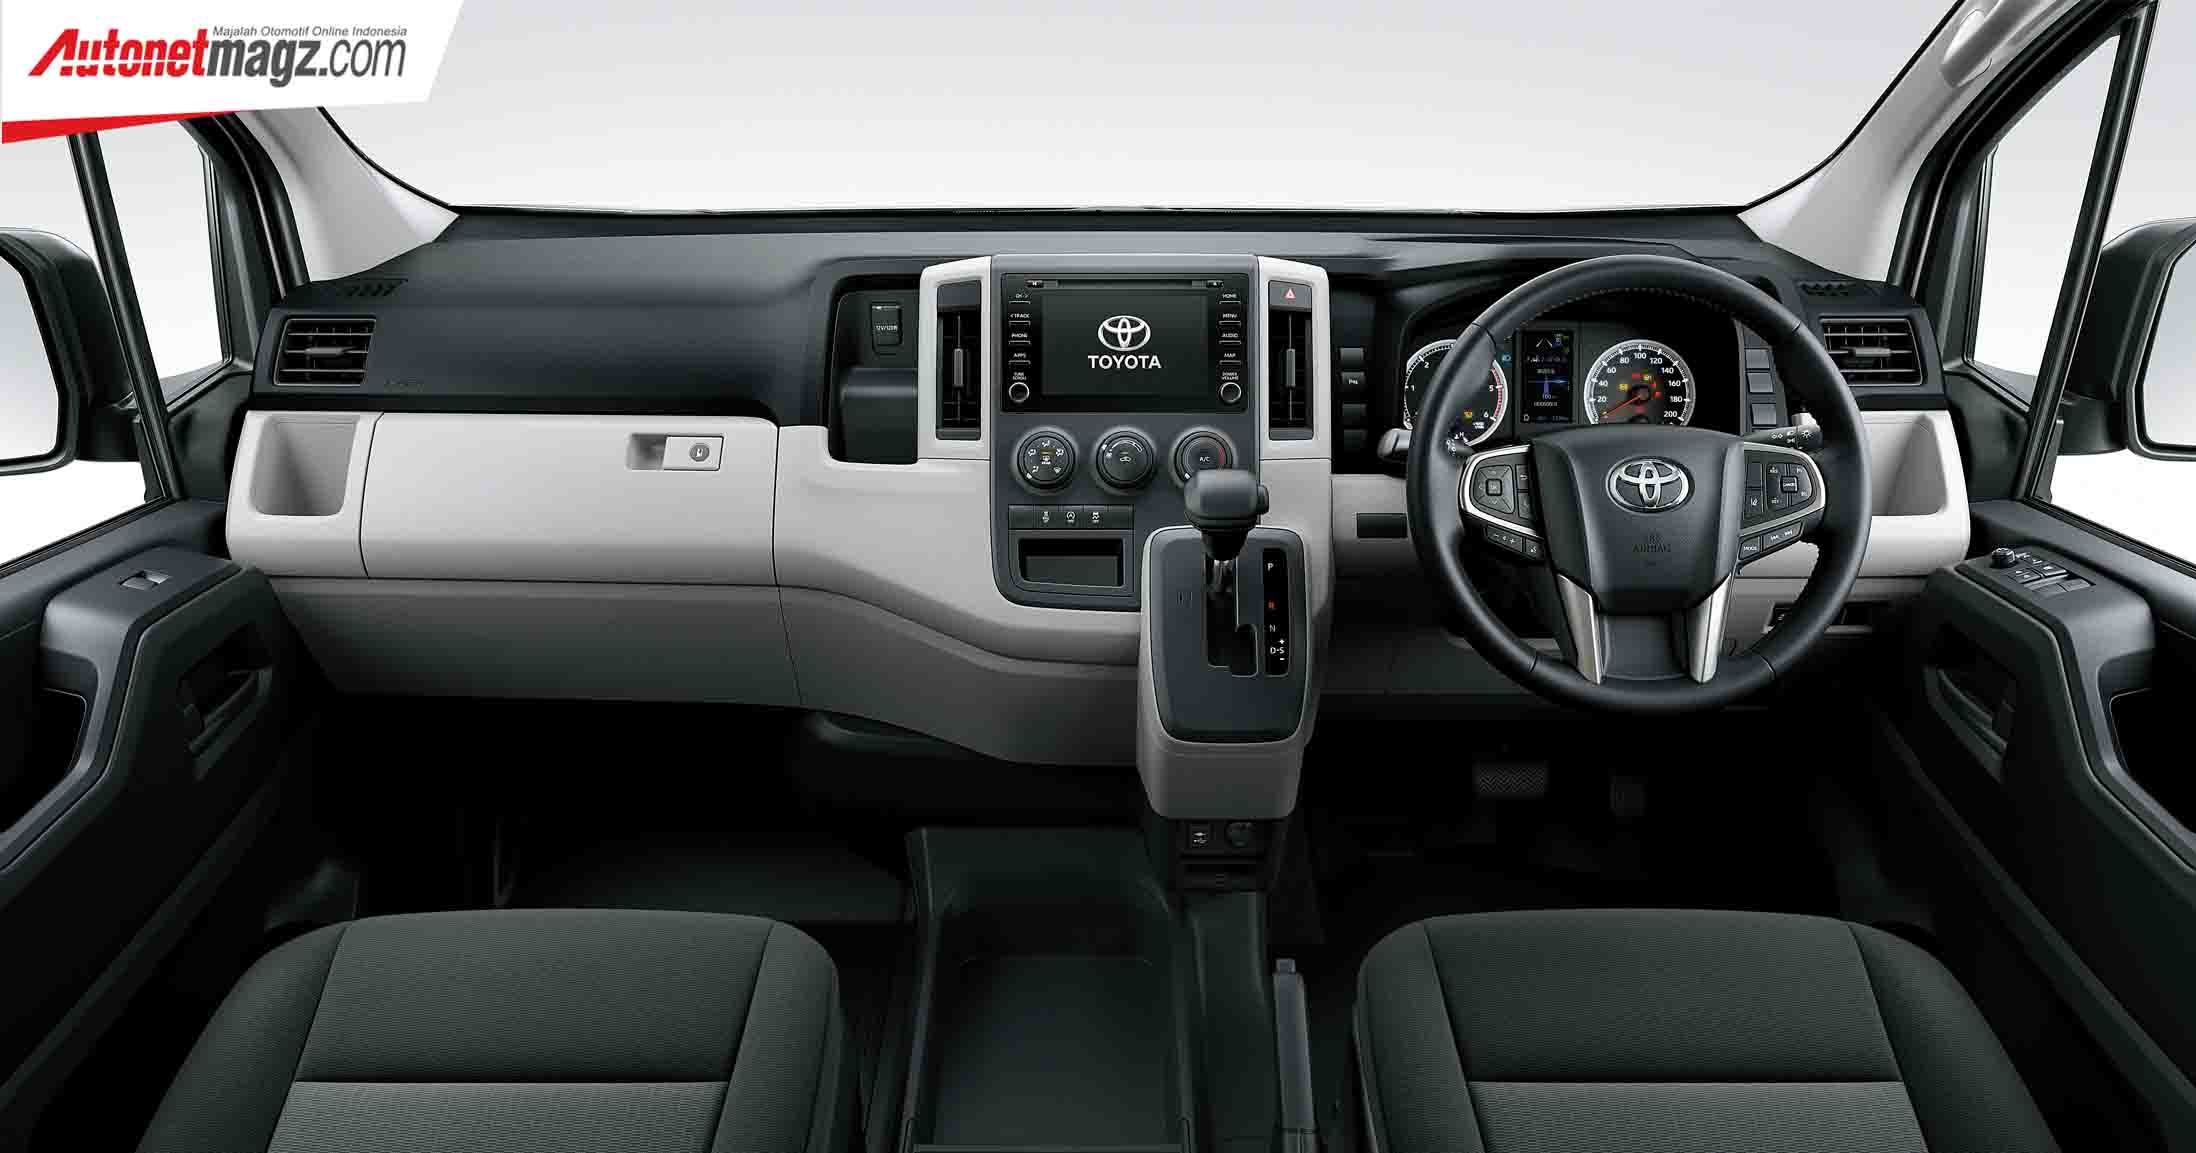 All New Toyota  HiAce  Interior  AutonetMagz Review 